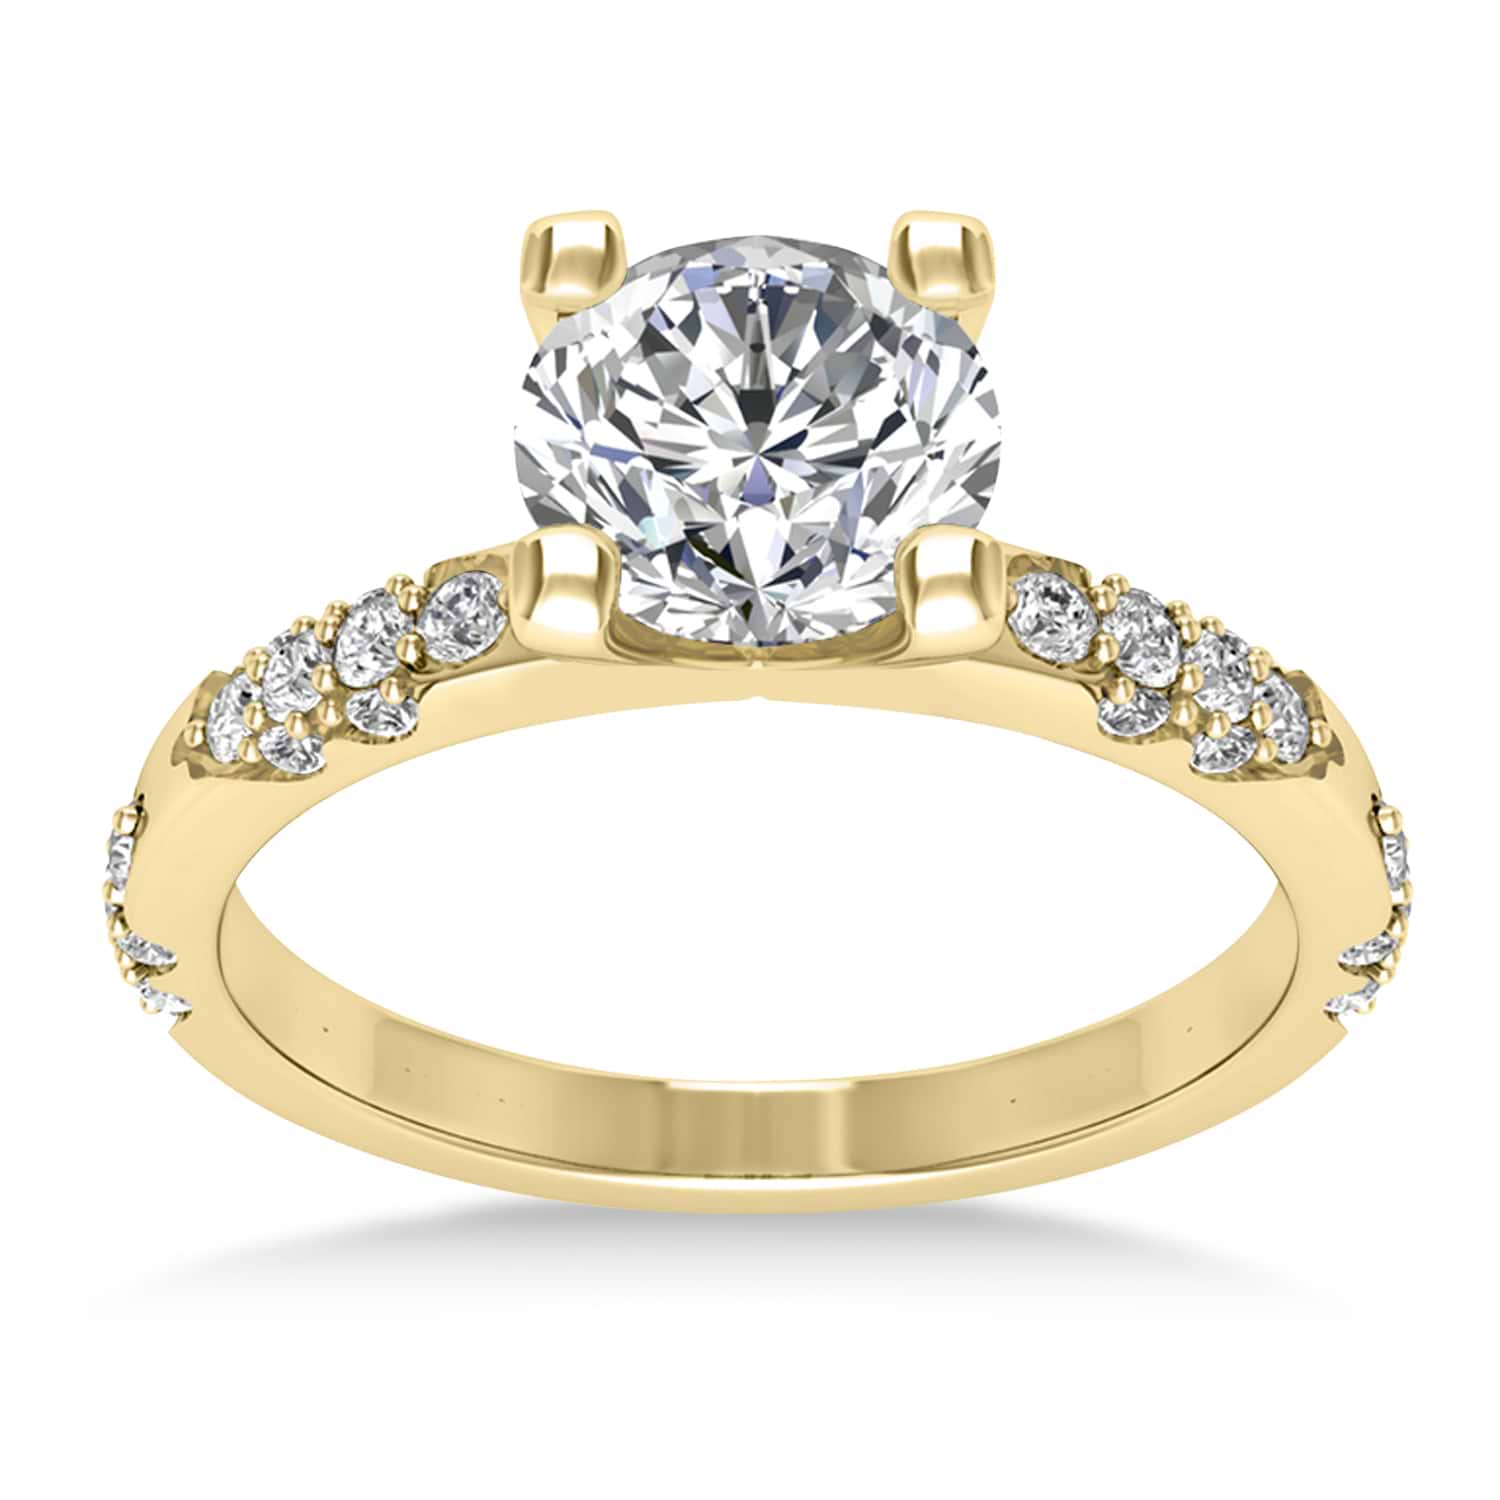 Diamond Prong Engagement Ring 18k Yellow Gold (0.32ct)